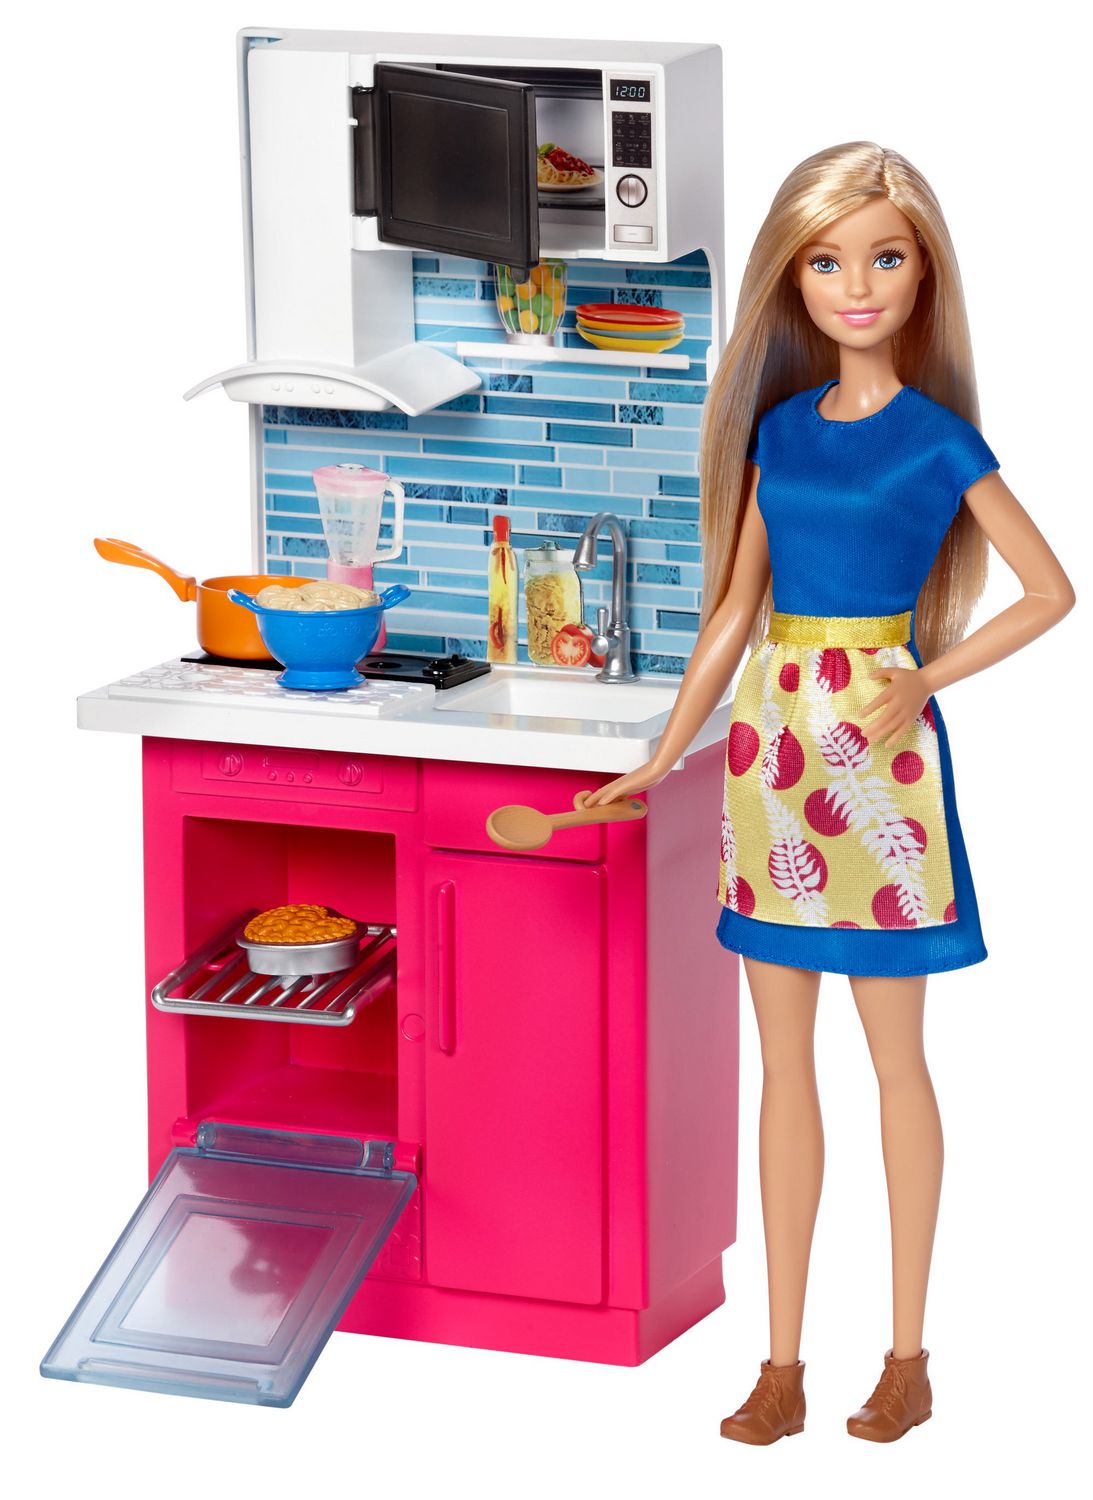 doll set and kitchen set